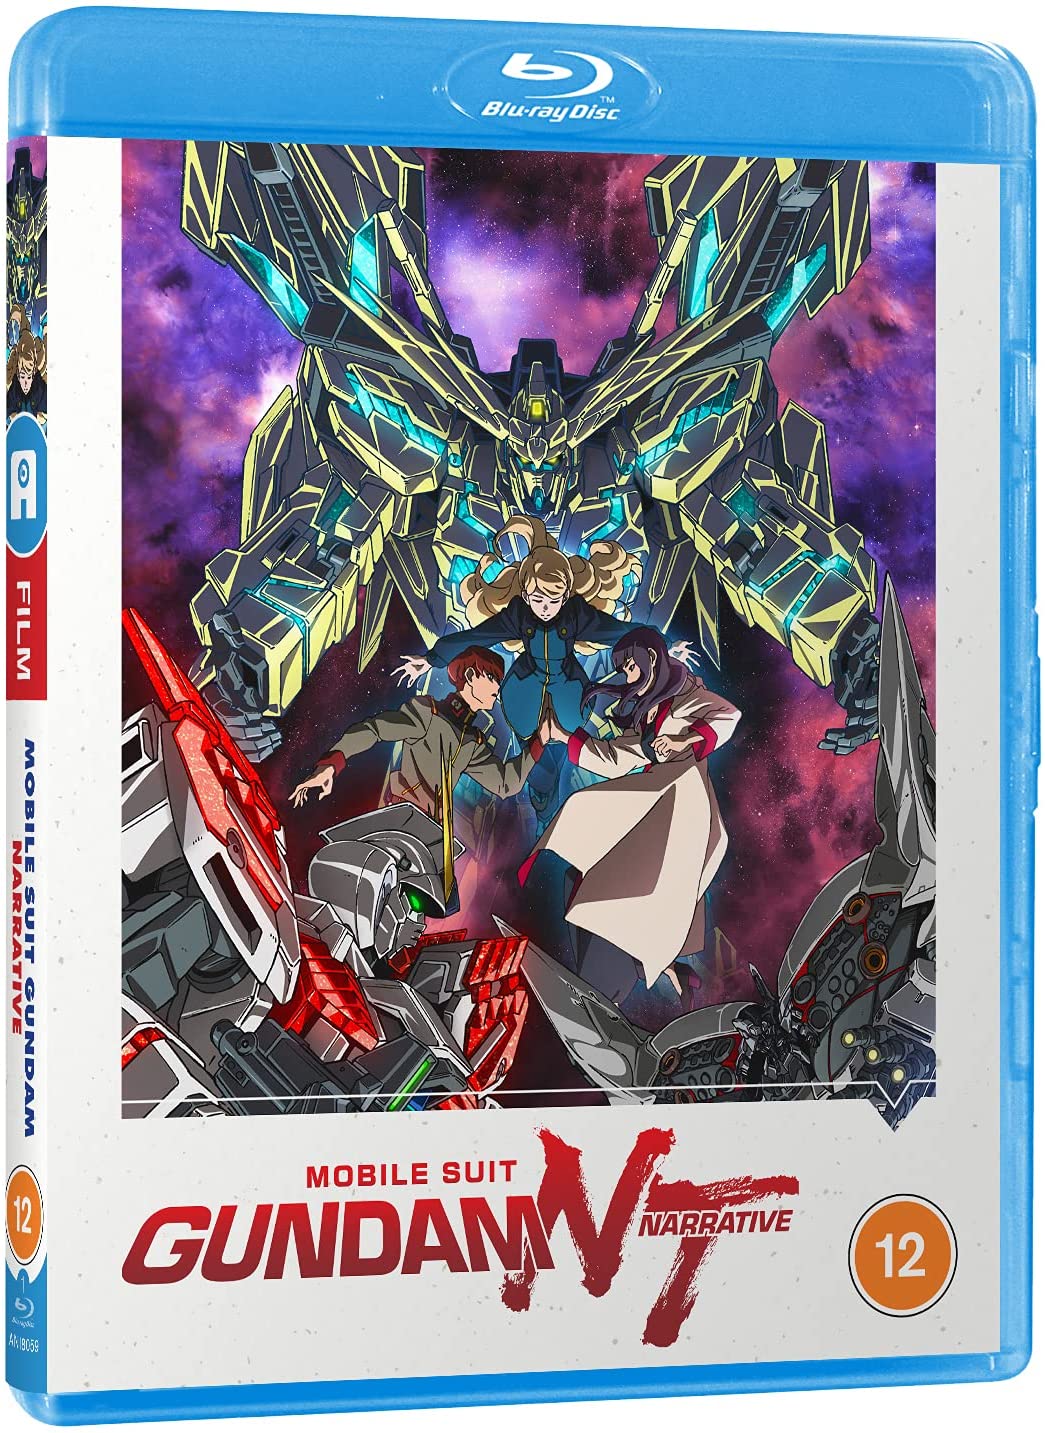 Gundam Narrative - Action/Sci-fi  [BLu-ray]